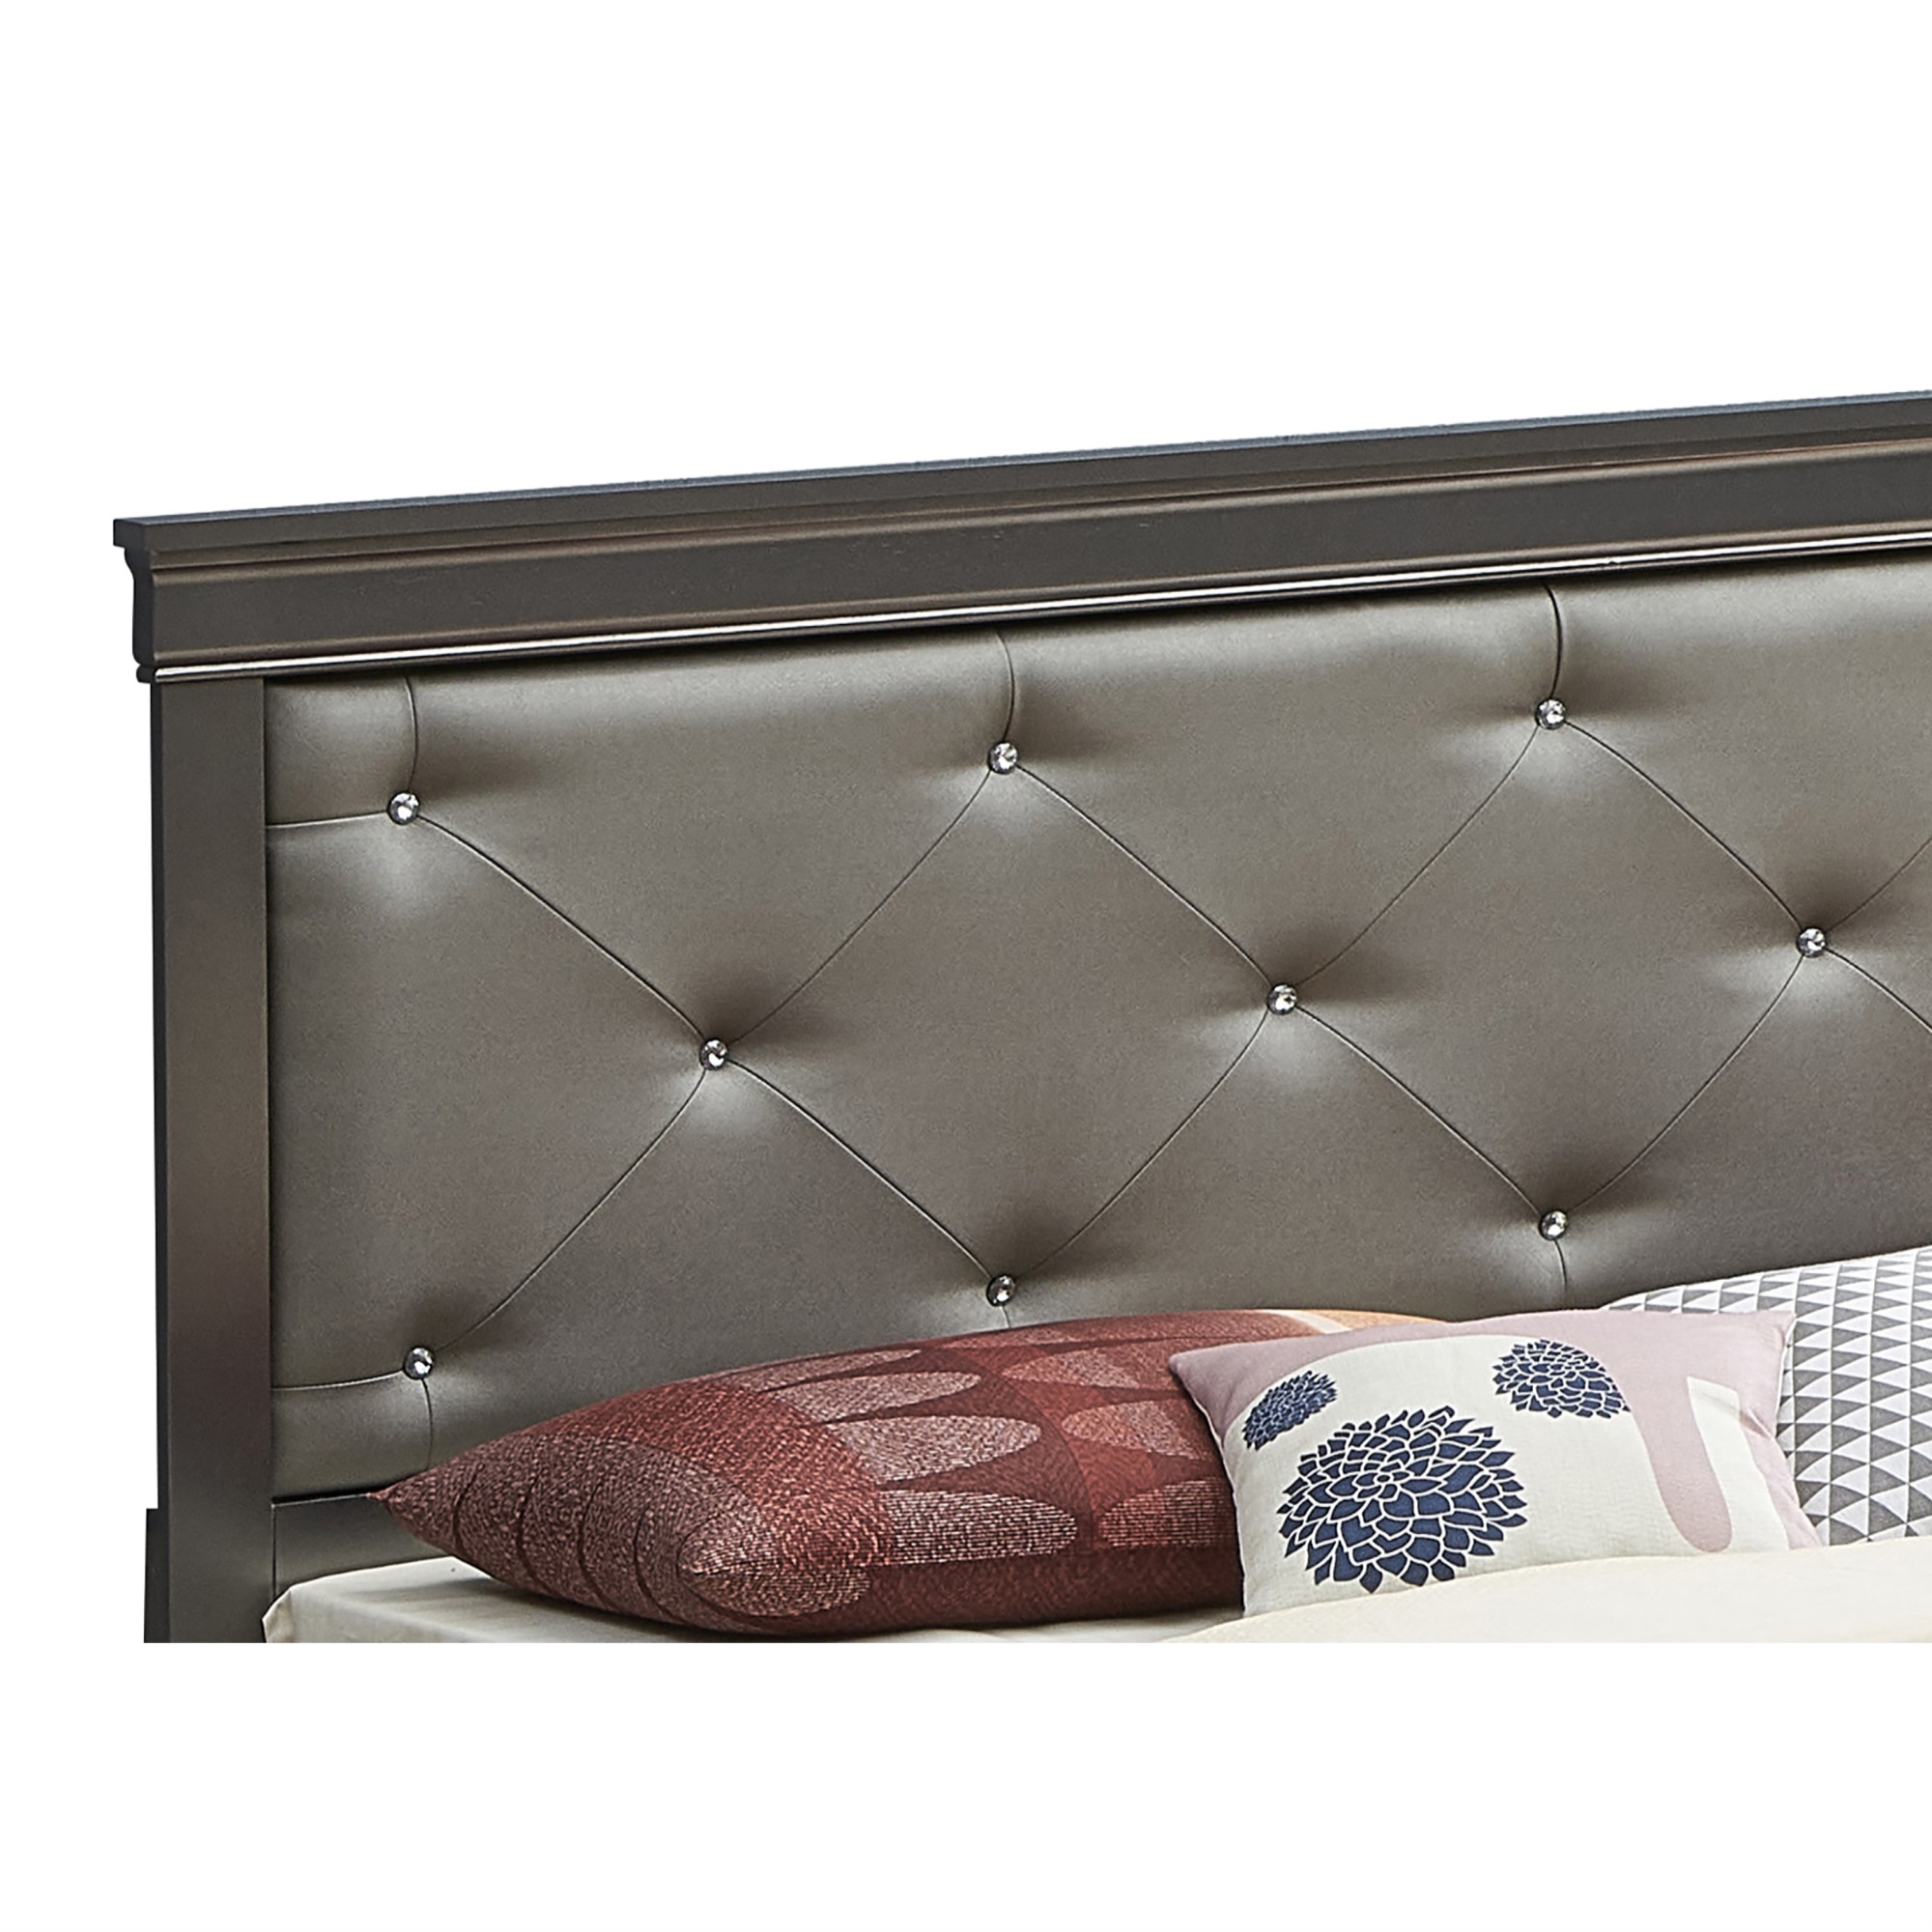 Passion Furniture Lorana Metalic Black Full Panel Beds, PF-G6502B-FB2 - image 4 of 5